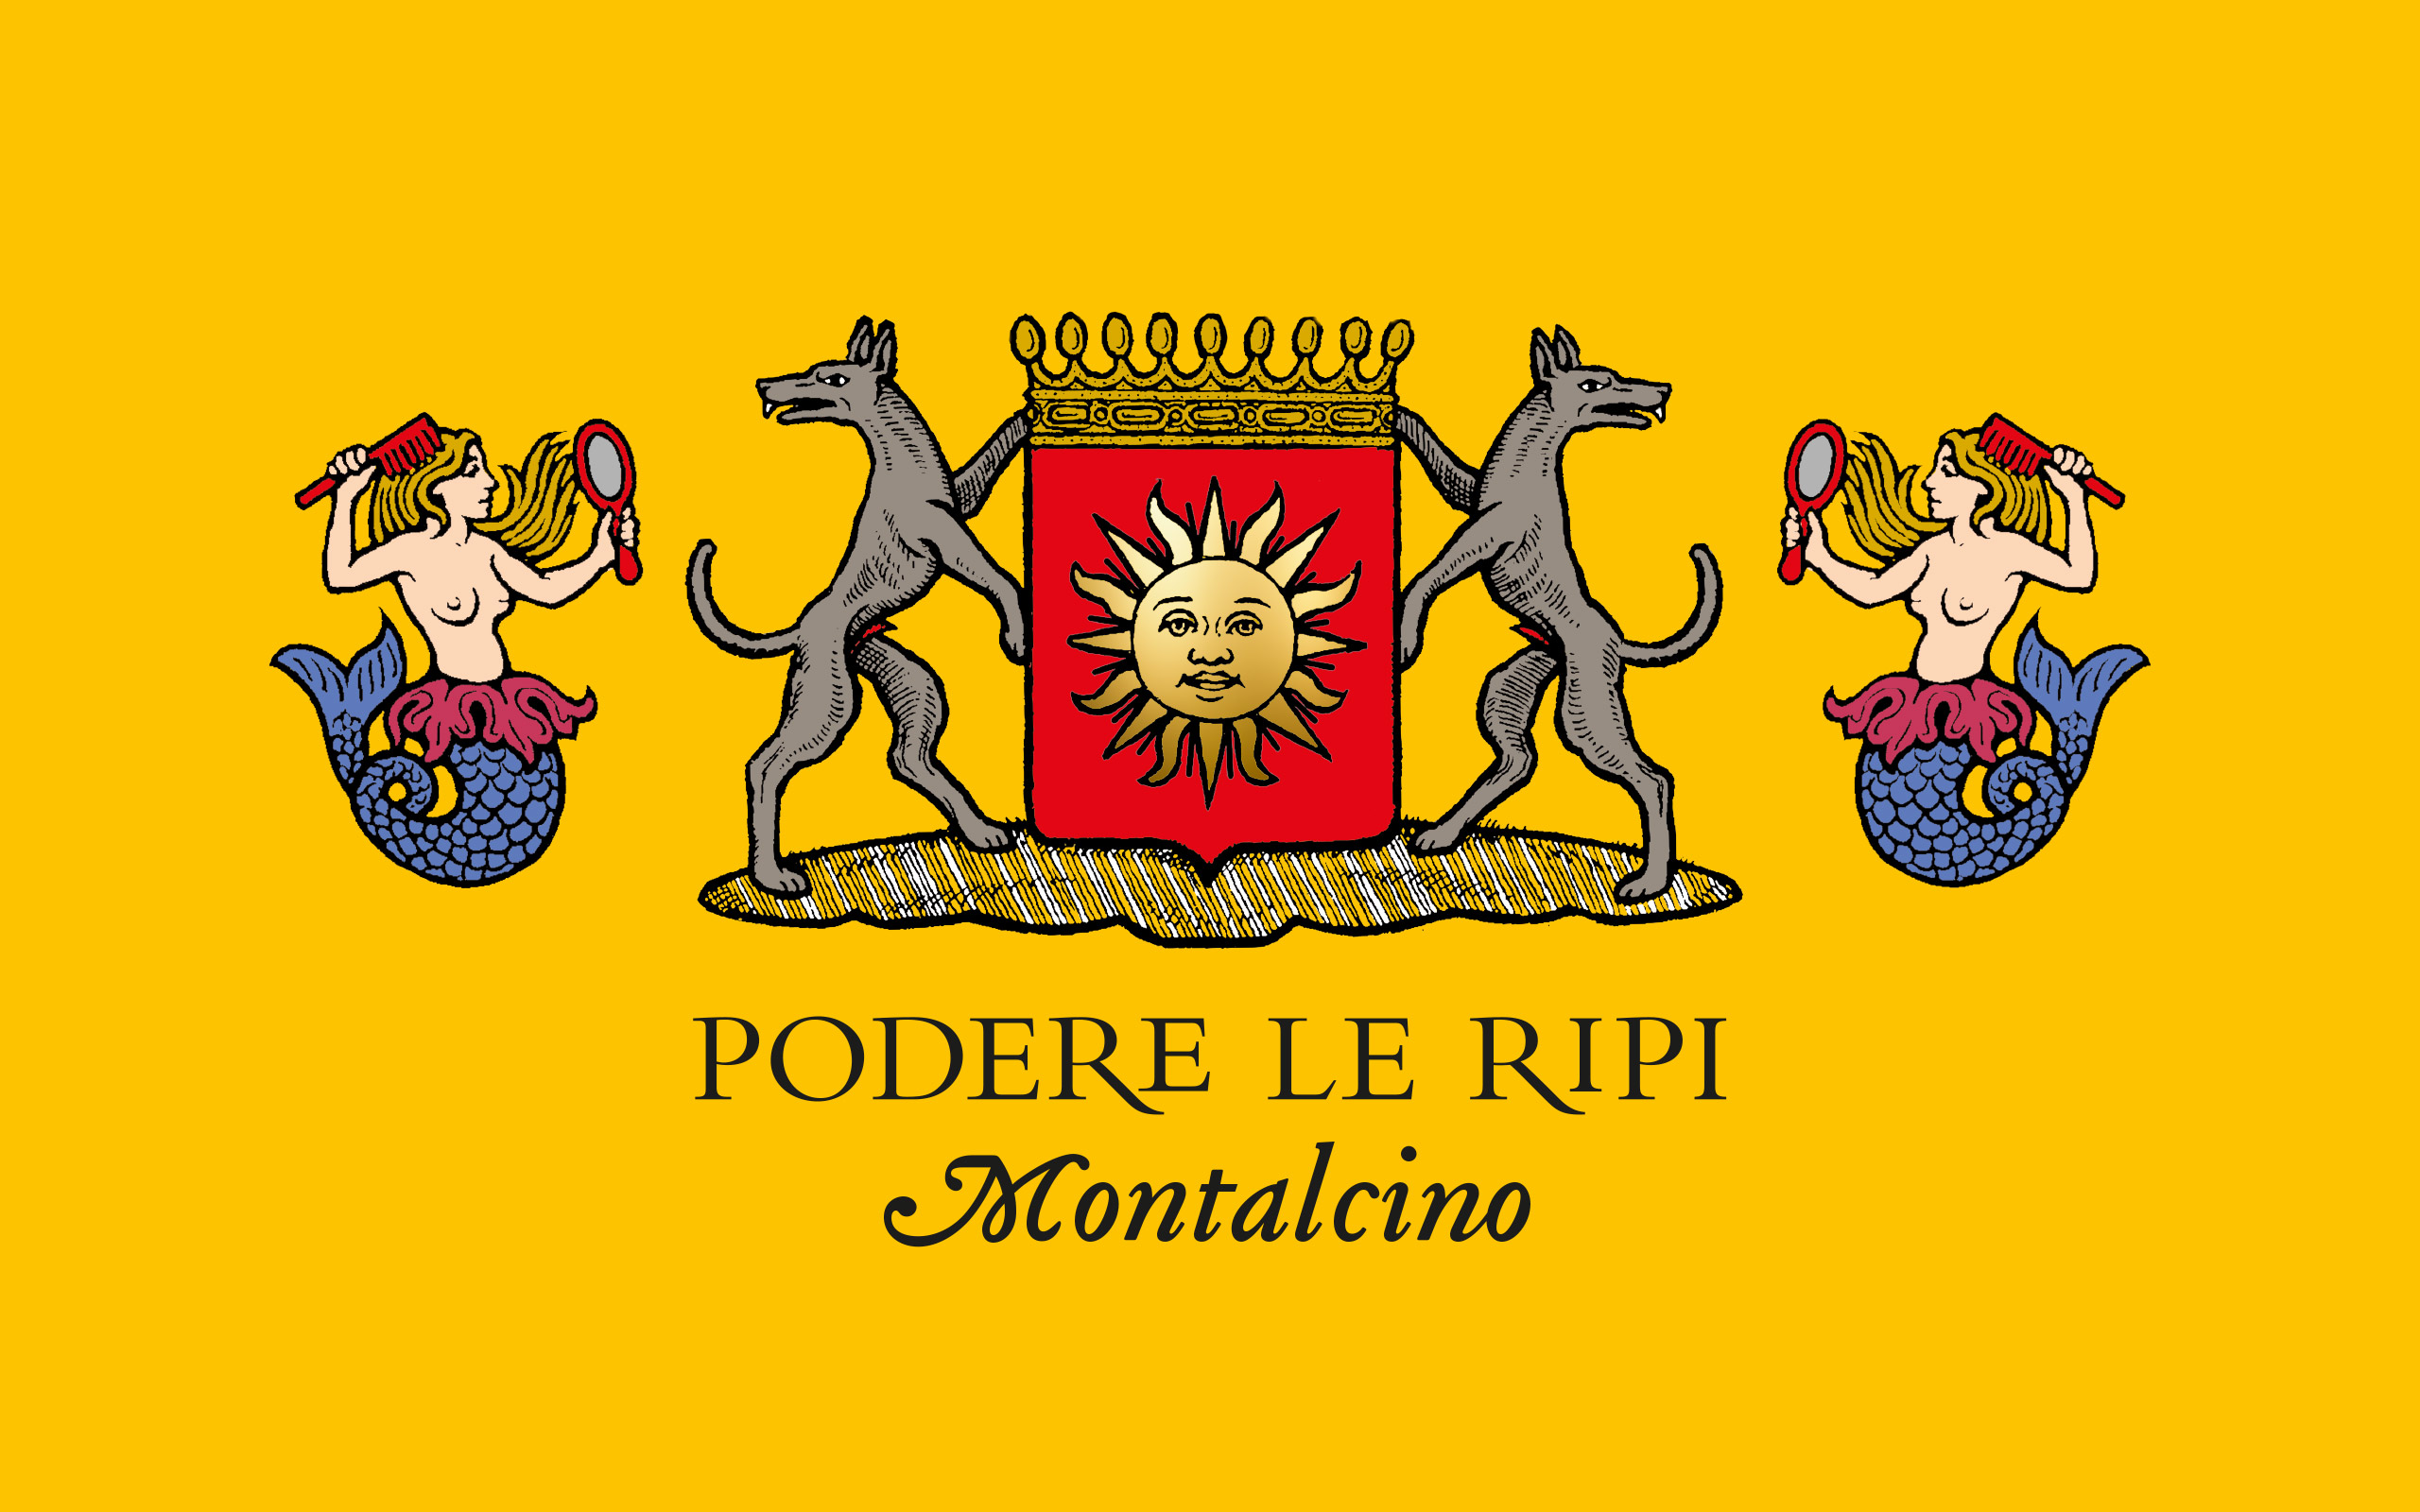 PodereRipi logo